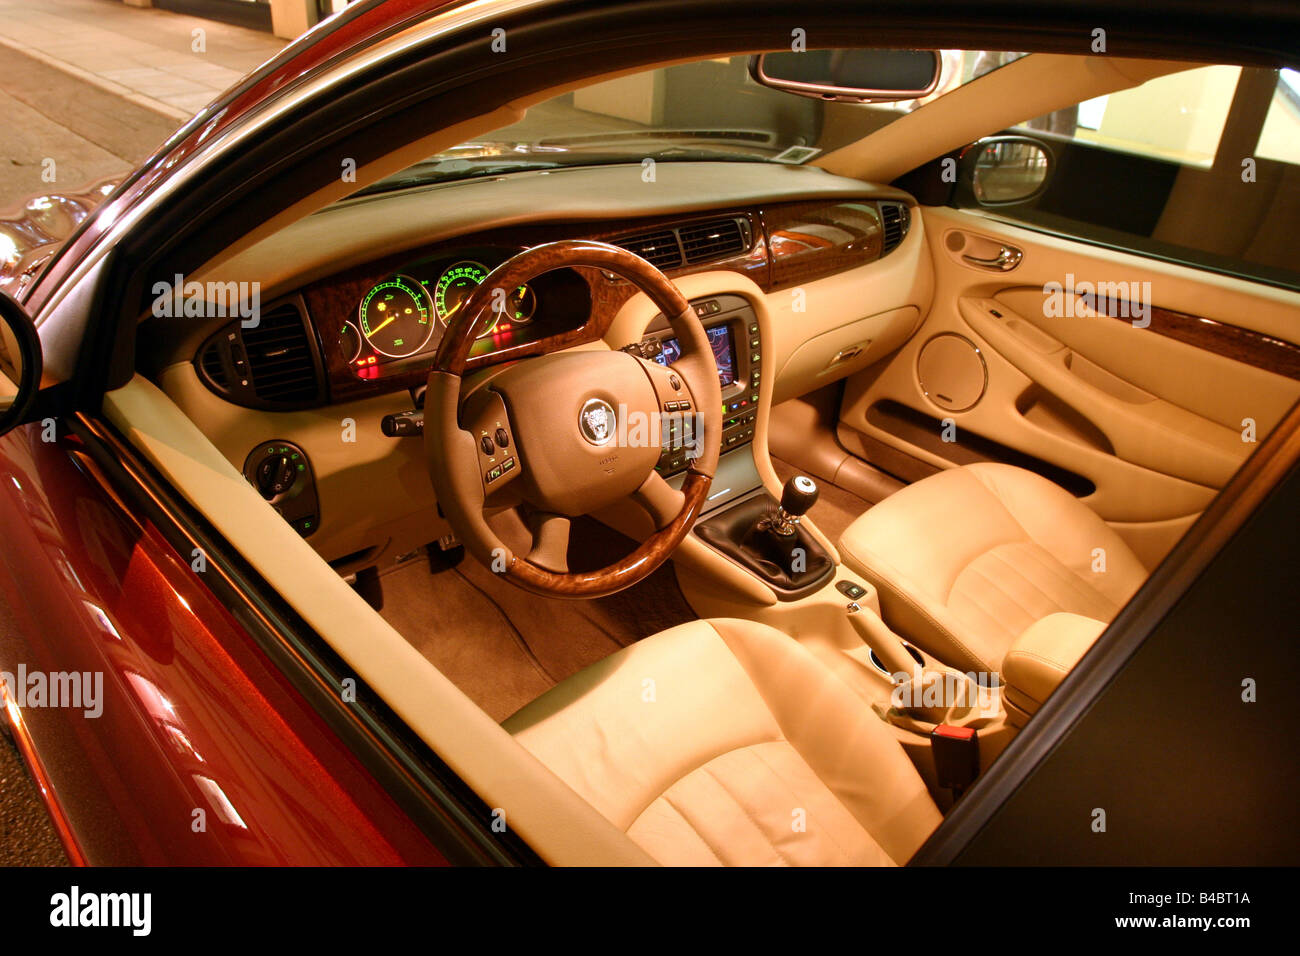 Jaguar x type interior hi-res stock photography and images - Alamy